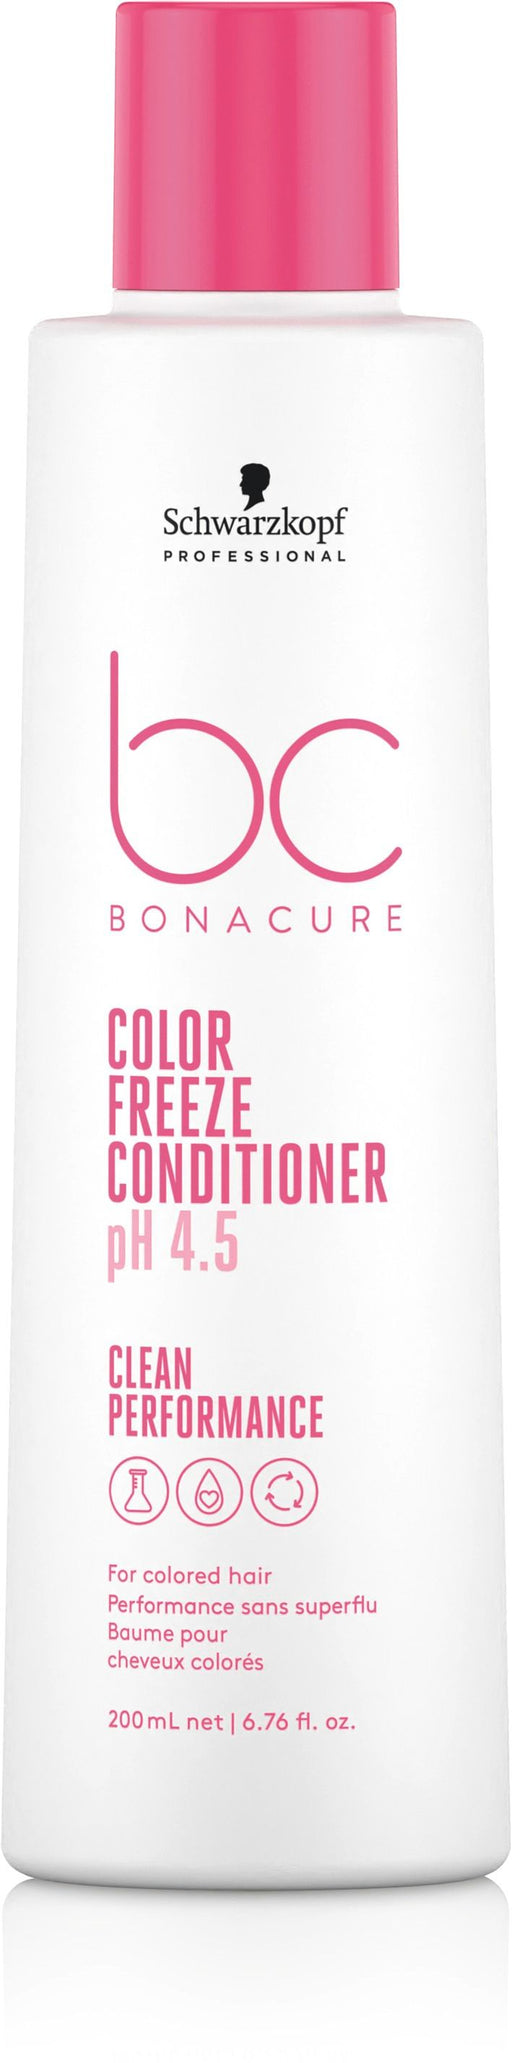 Schwarzkopf BC Clean Performance Color Freeze Conditioner